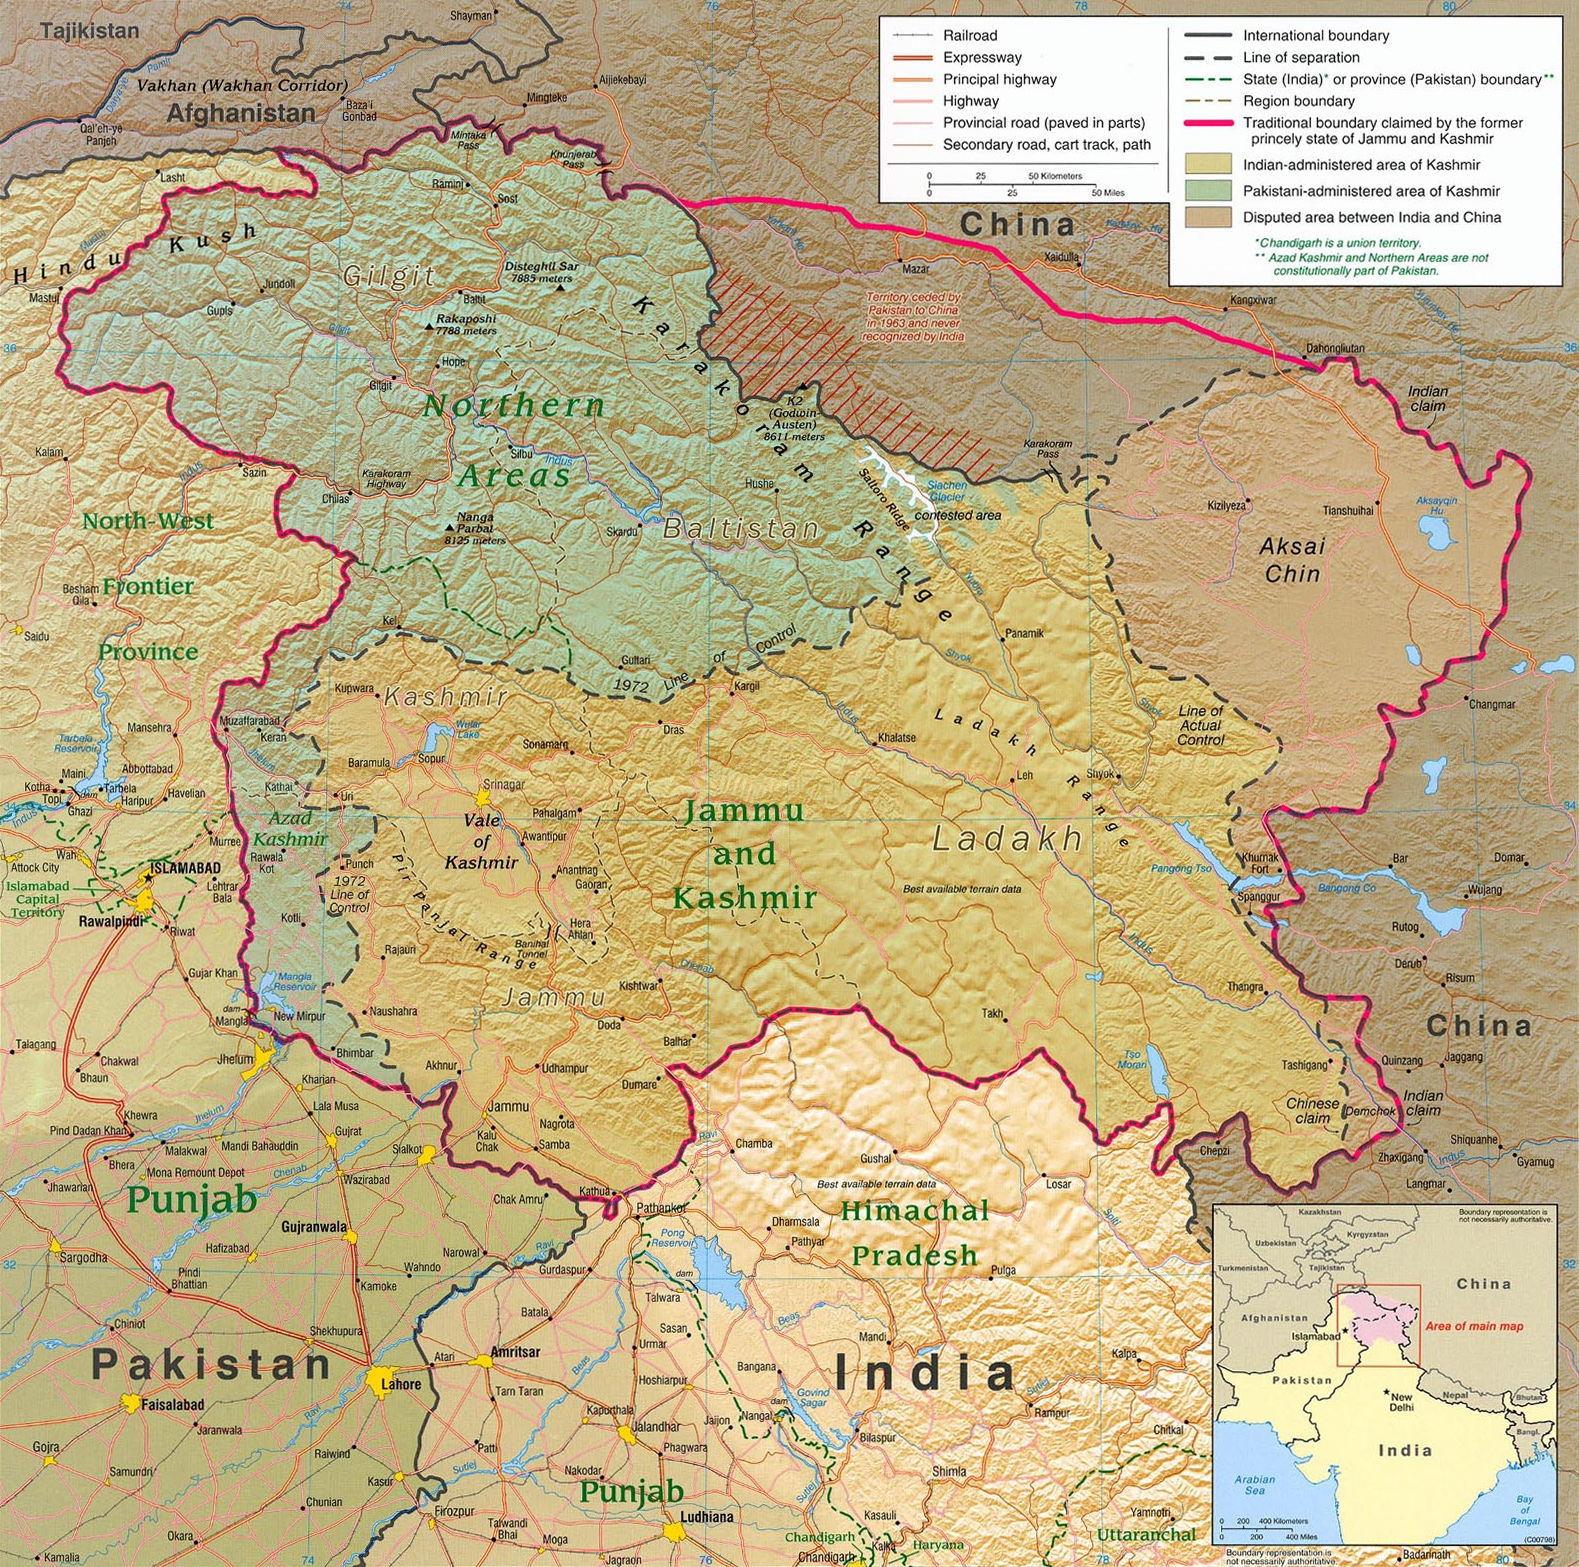 Kashmir_region_2004.jpg